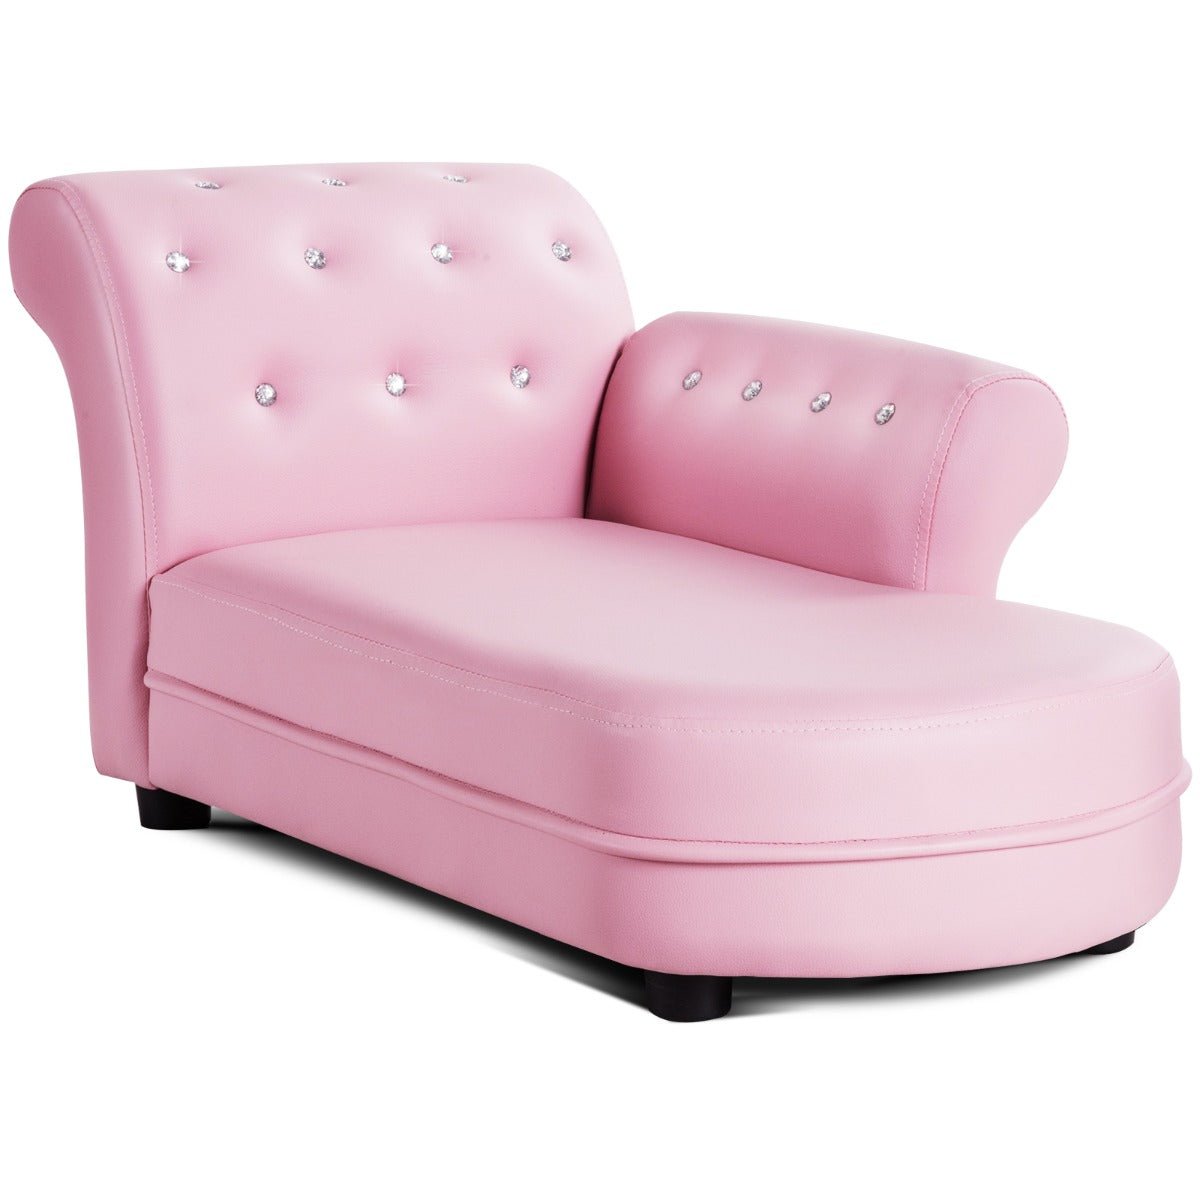 Kids Pink Sofa: Embellished with Crystals, PVC Leather - Divine Comfort